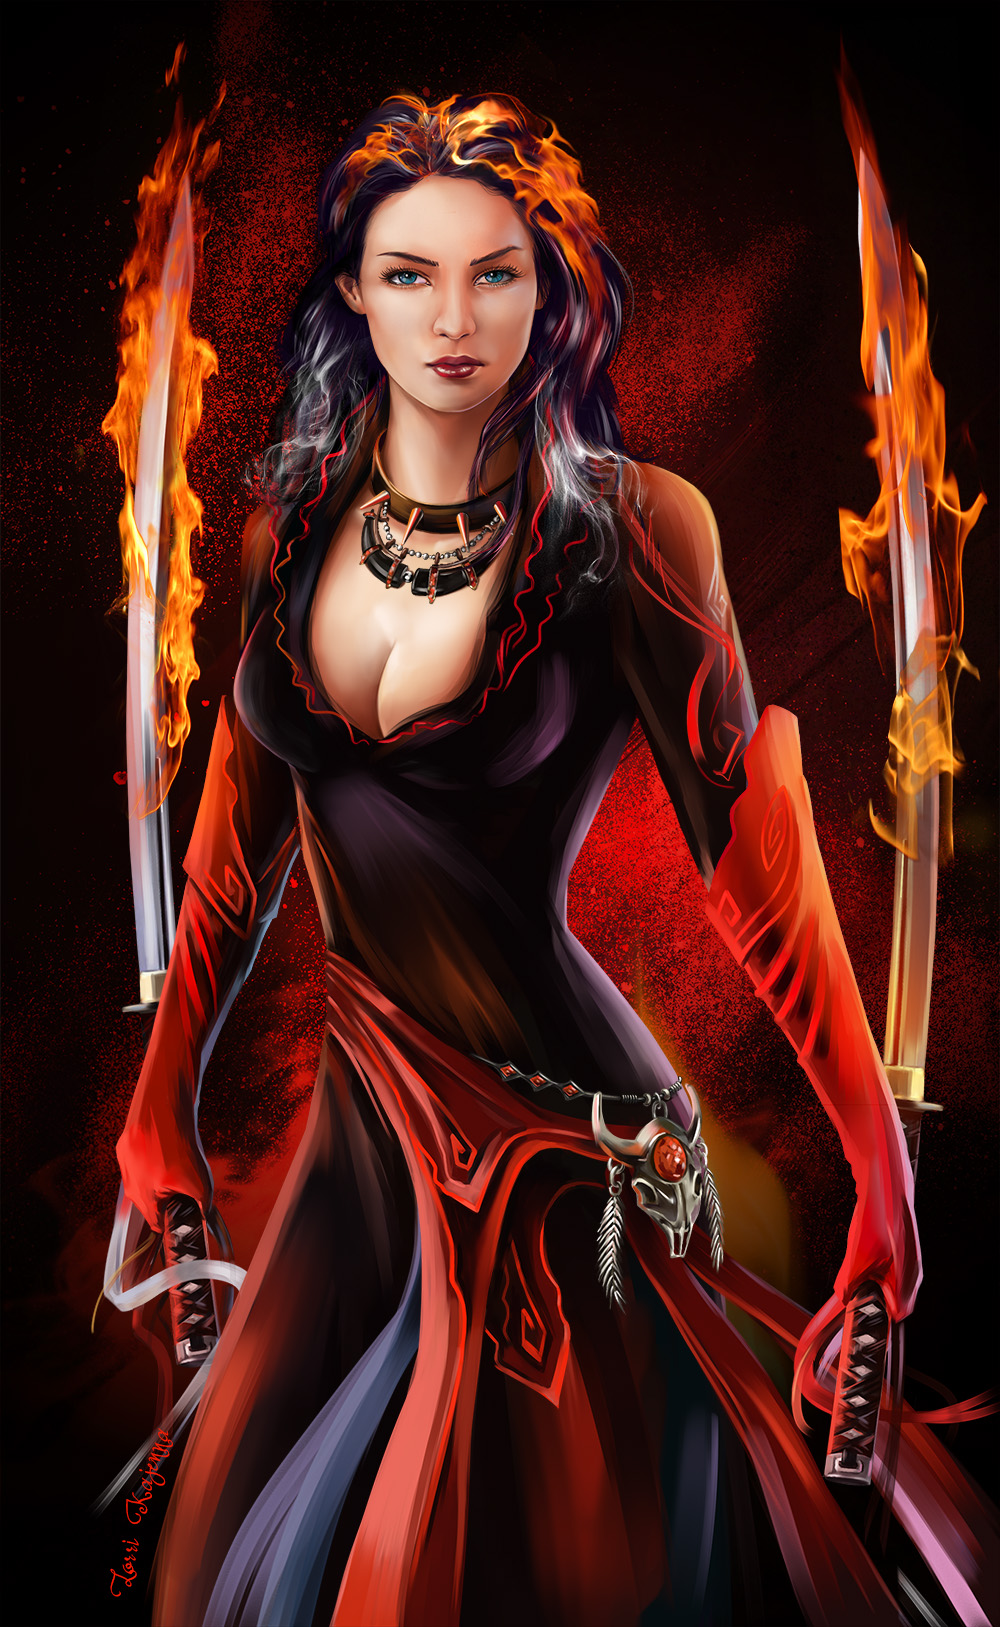 Fiery warrior by Kajenna